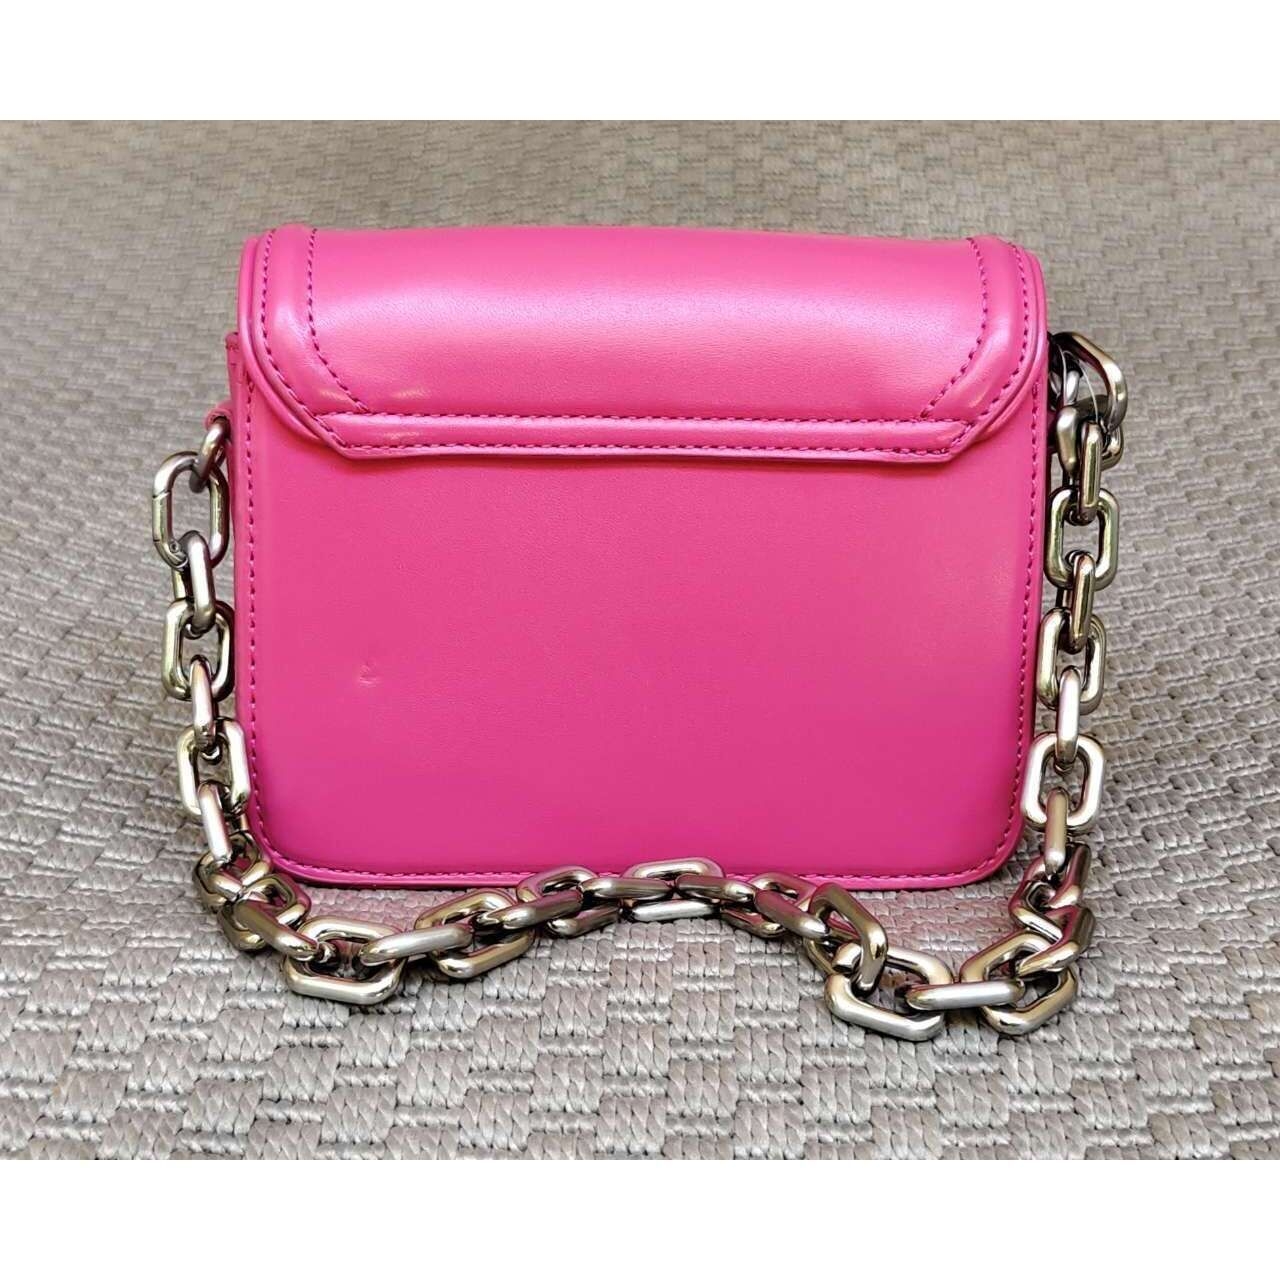 Zara Fuchsia Slingbag with Chain Handle